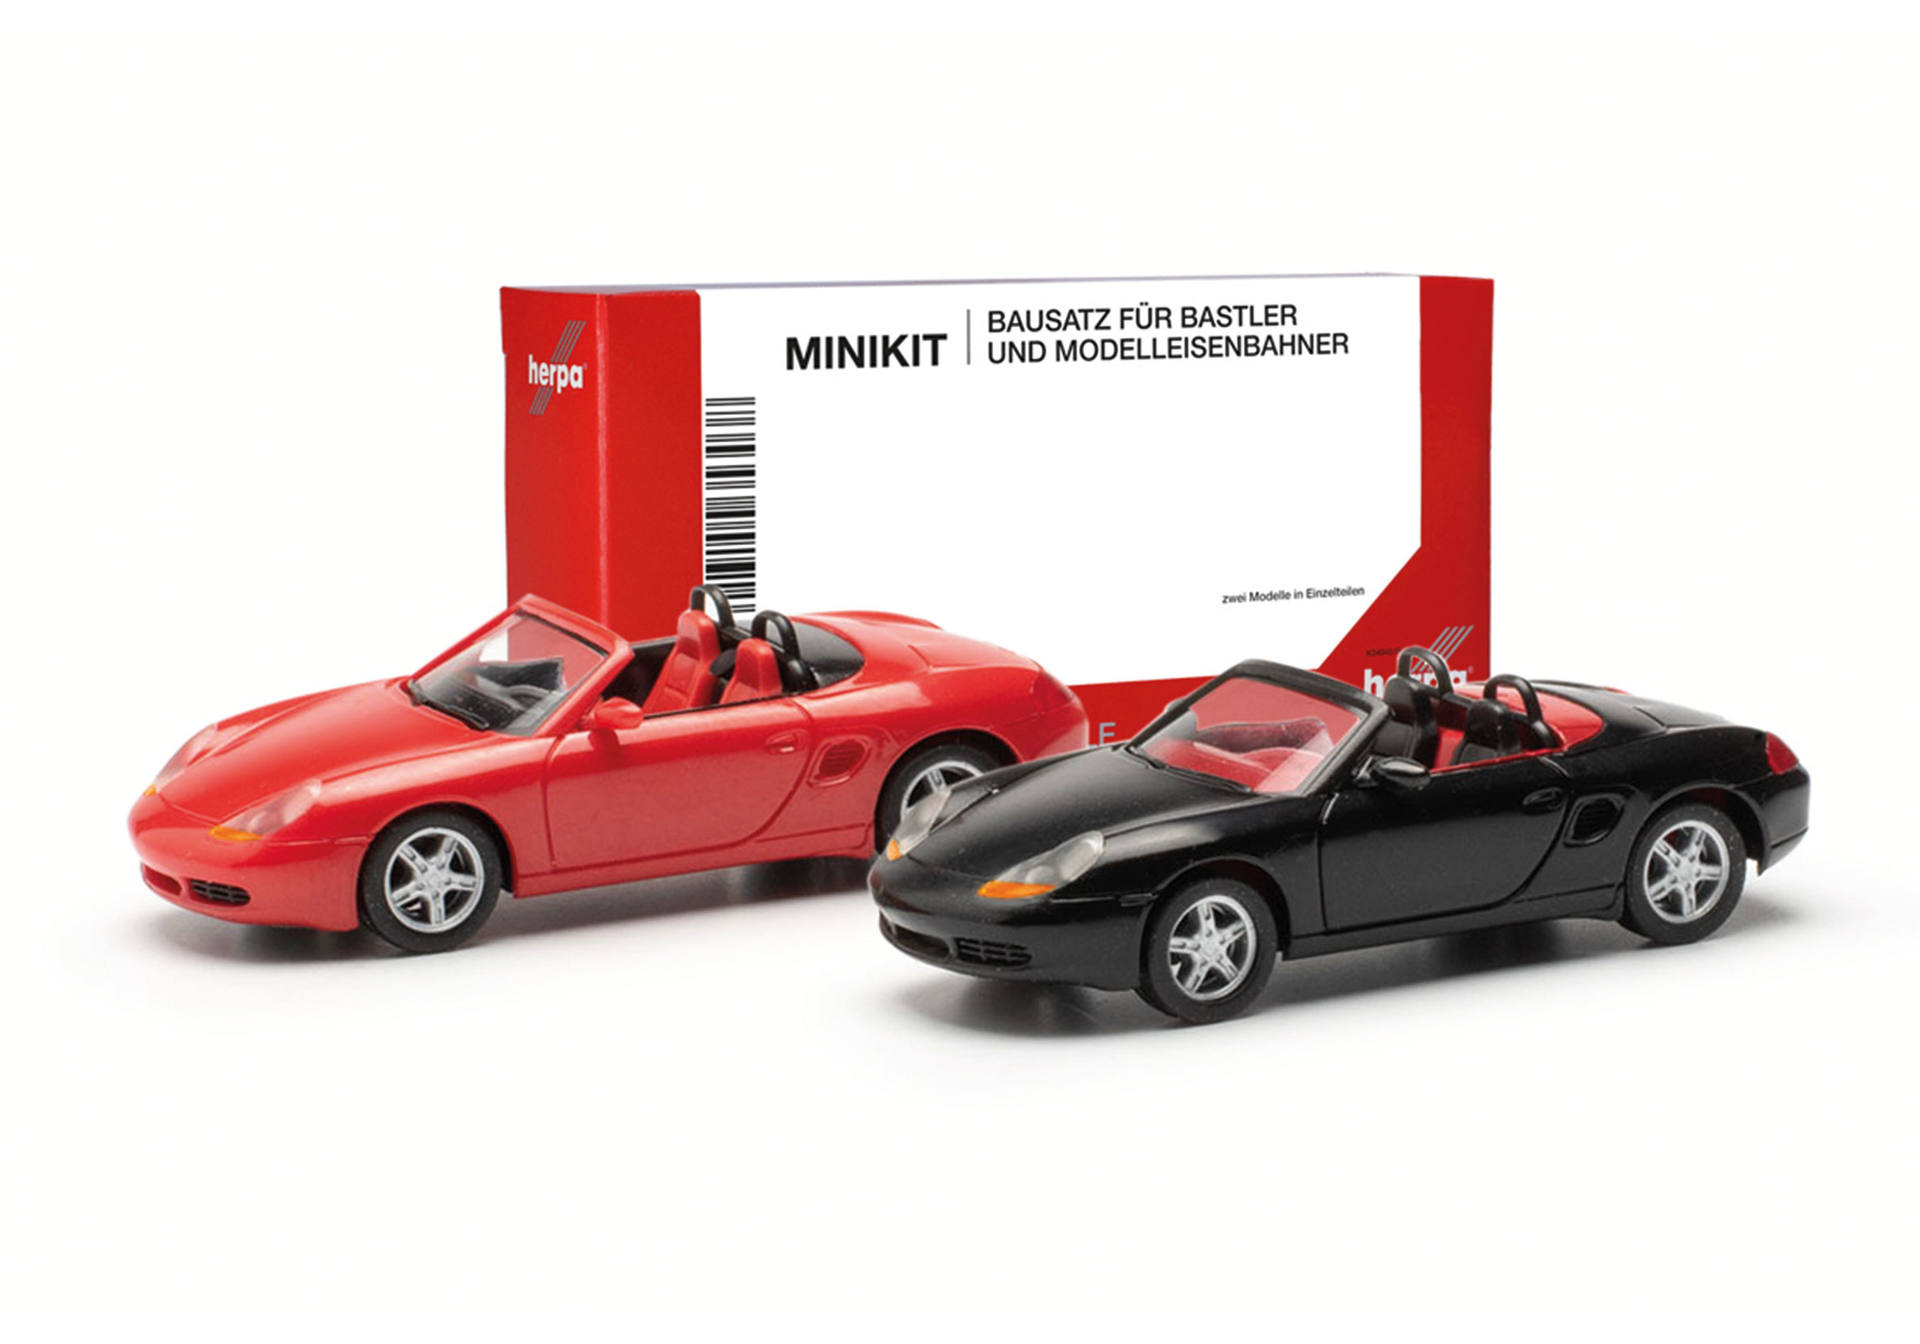 Herpa MiniKit: Porsche Boxster S, 2 pieces